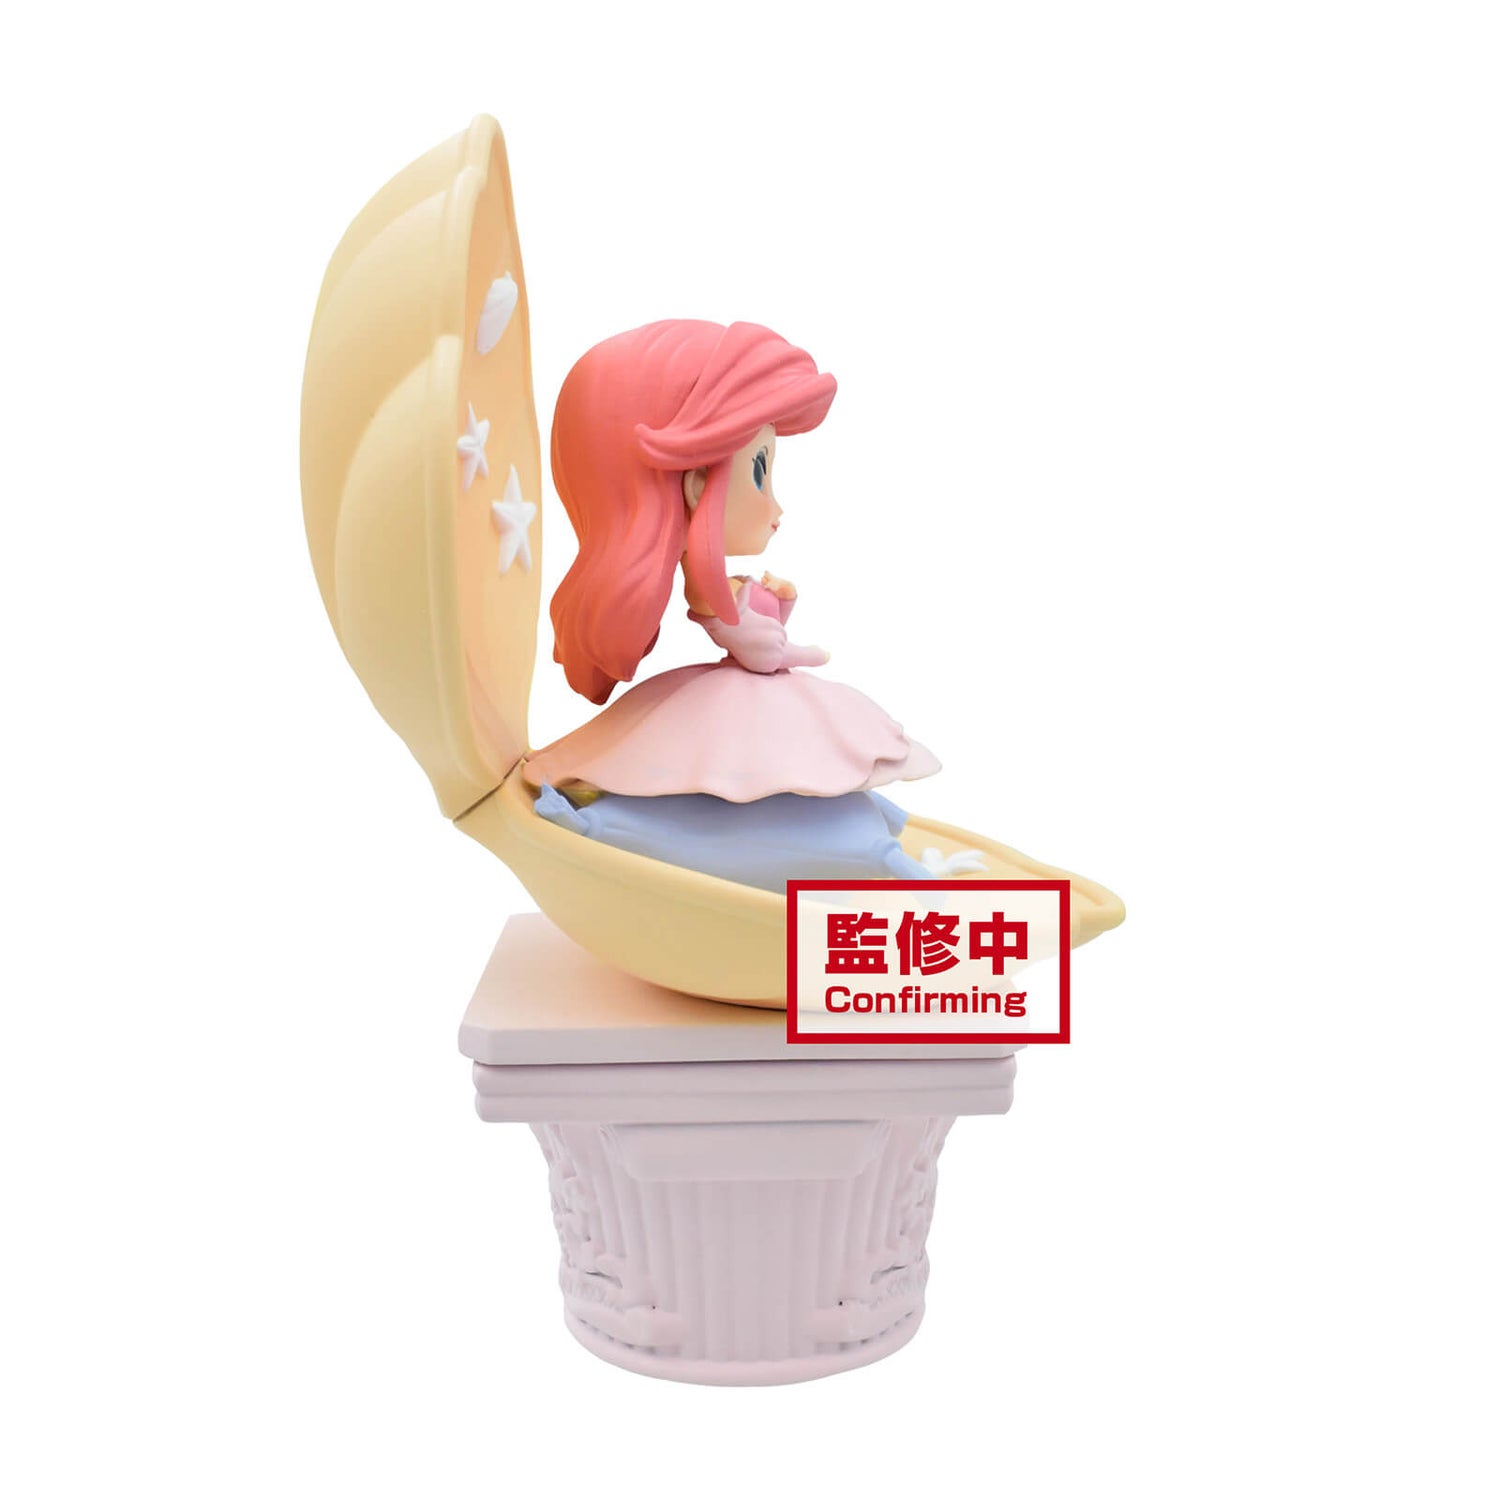 Figurine Banpresto Q Posket Stories Disney Characters Ariel Robe Rose Ver. B - 14 cm